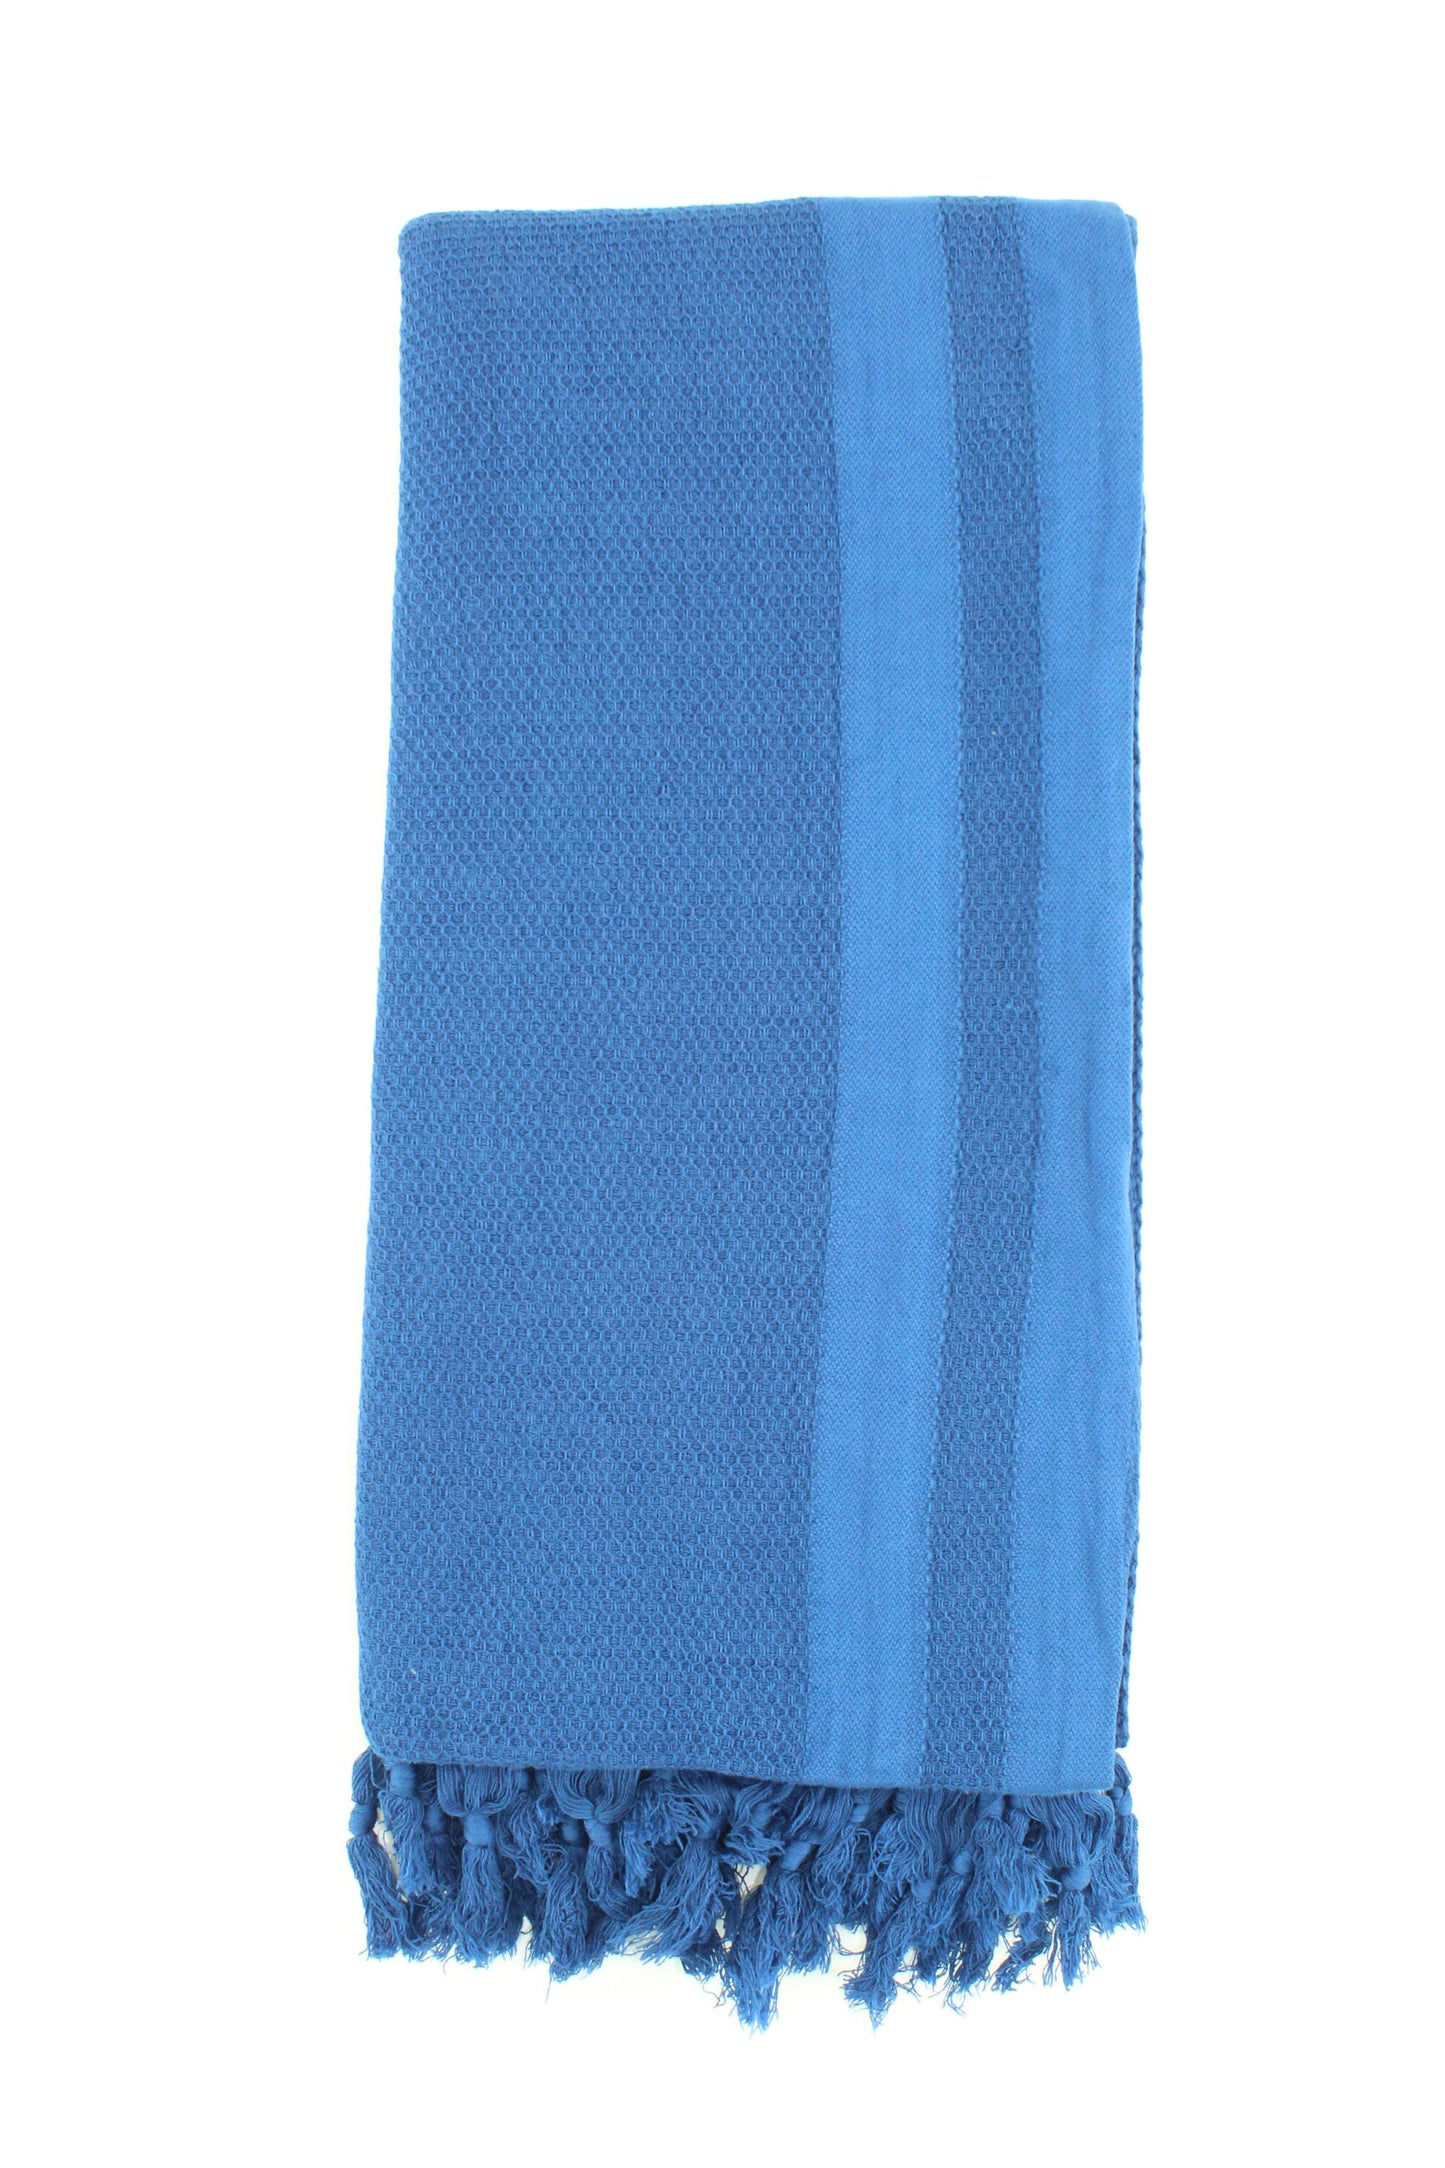 Premium Turkish Towel Peshtemal Fouta (Royal Blue)